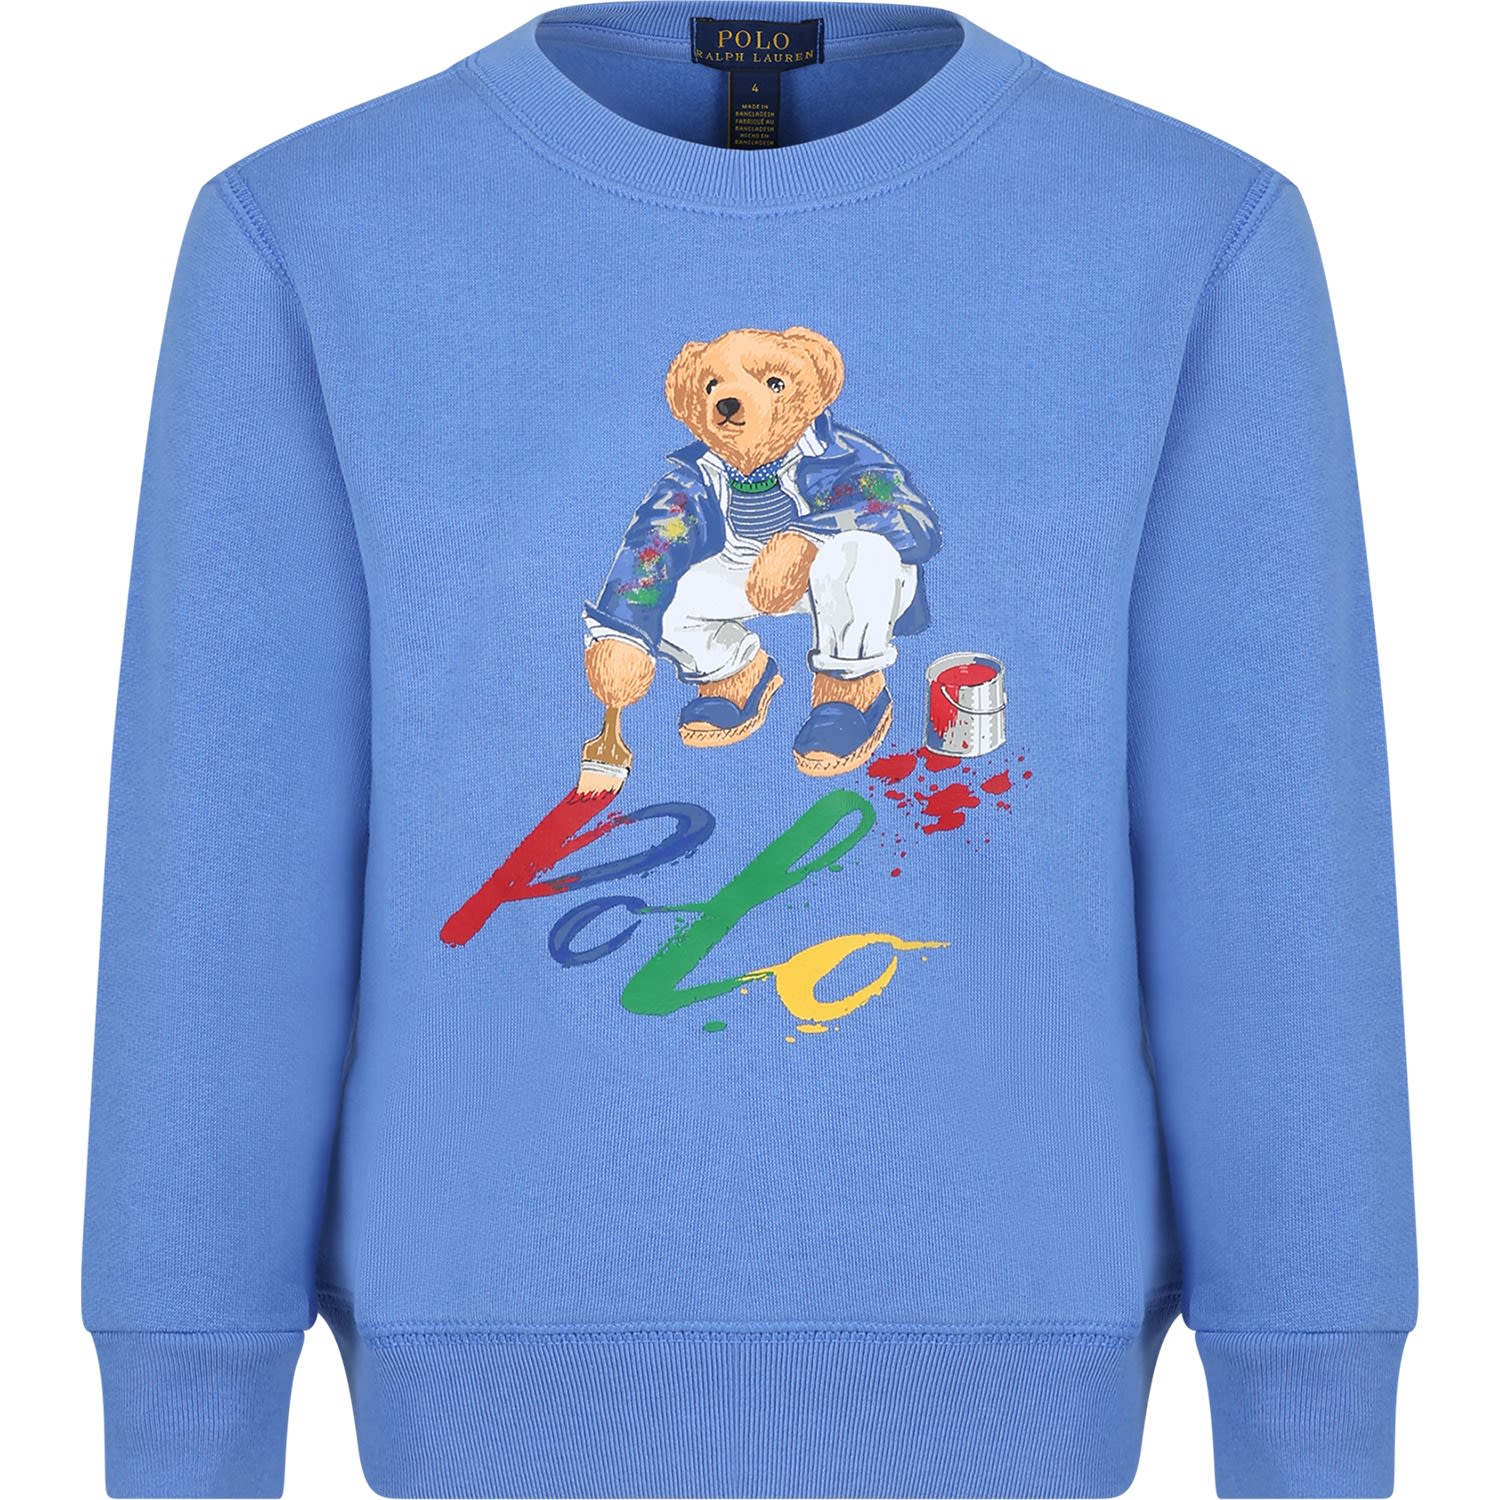 Ralph Lauren Light Blue Sweatshirt For Baby Boy With Polo Bear